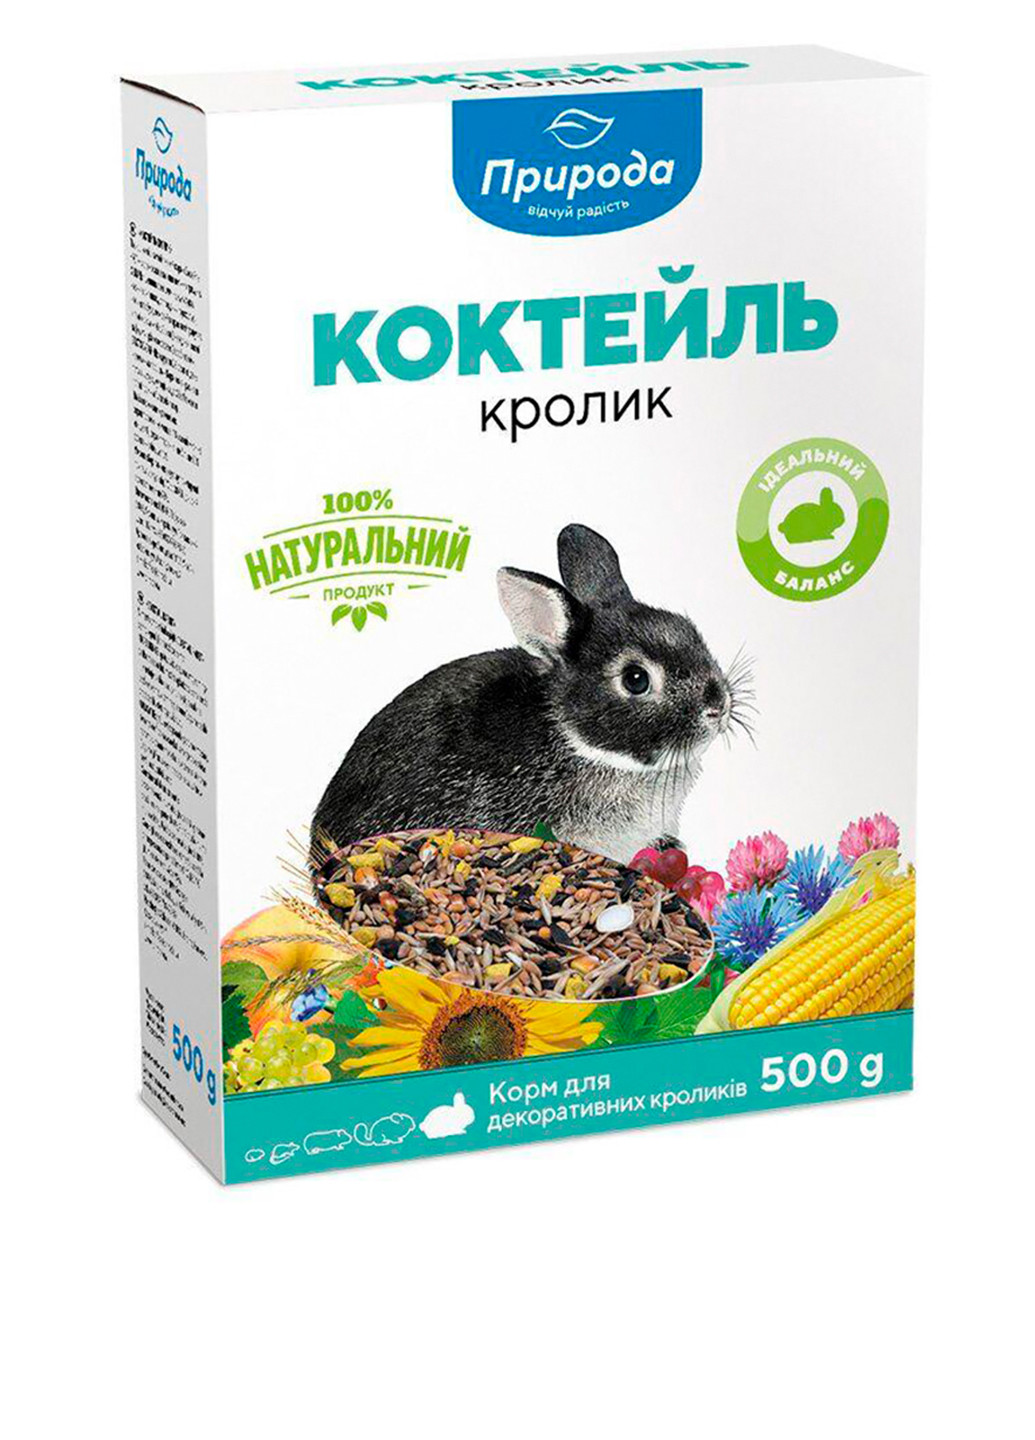 Сухой корм Коктейль Кролик, 500 г Природа (251149995)